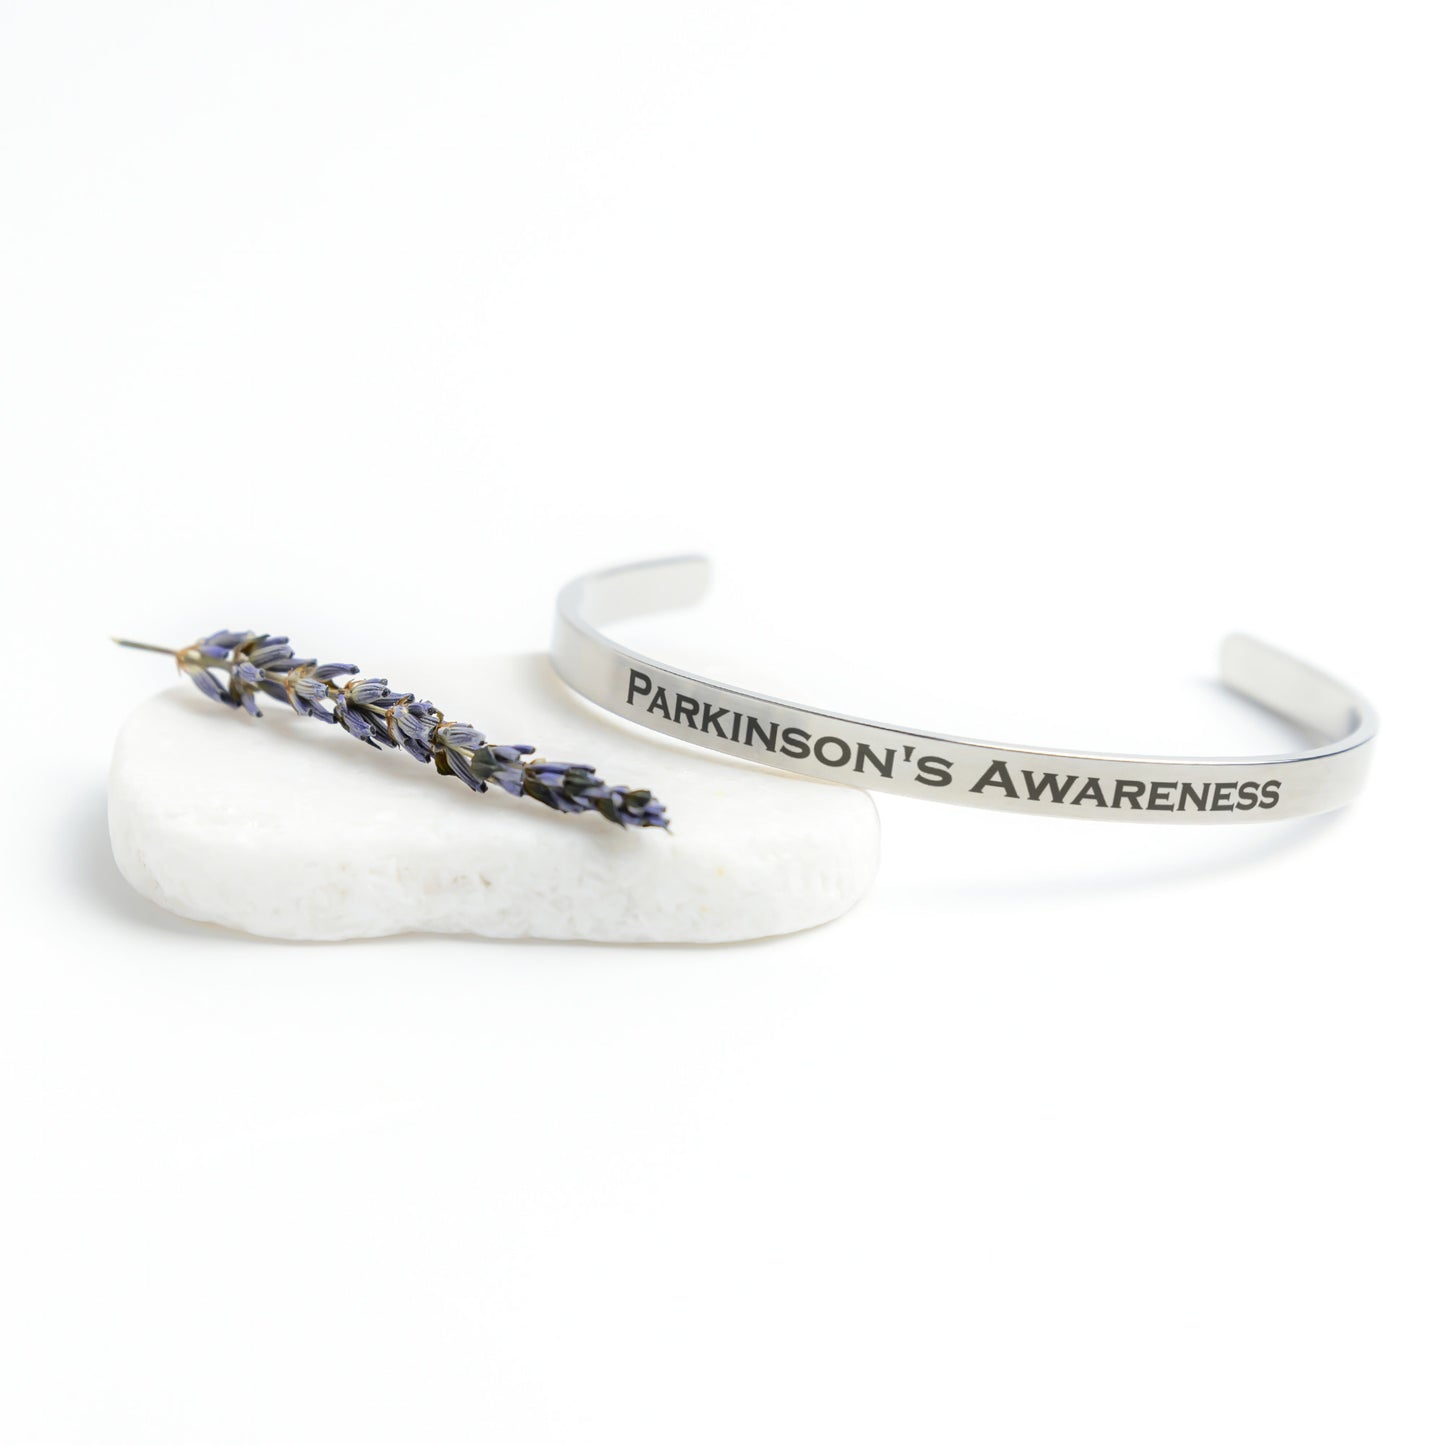 Personalized Parkinson's Awareness Cuff Bracelet